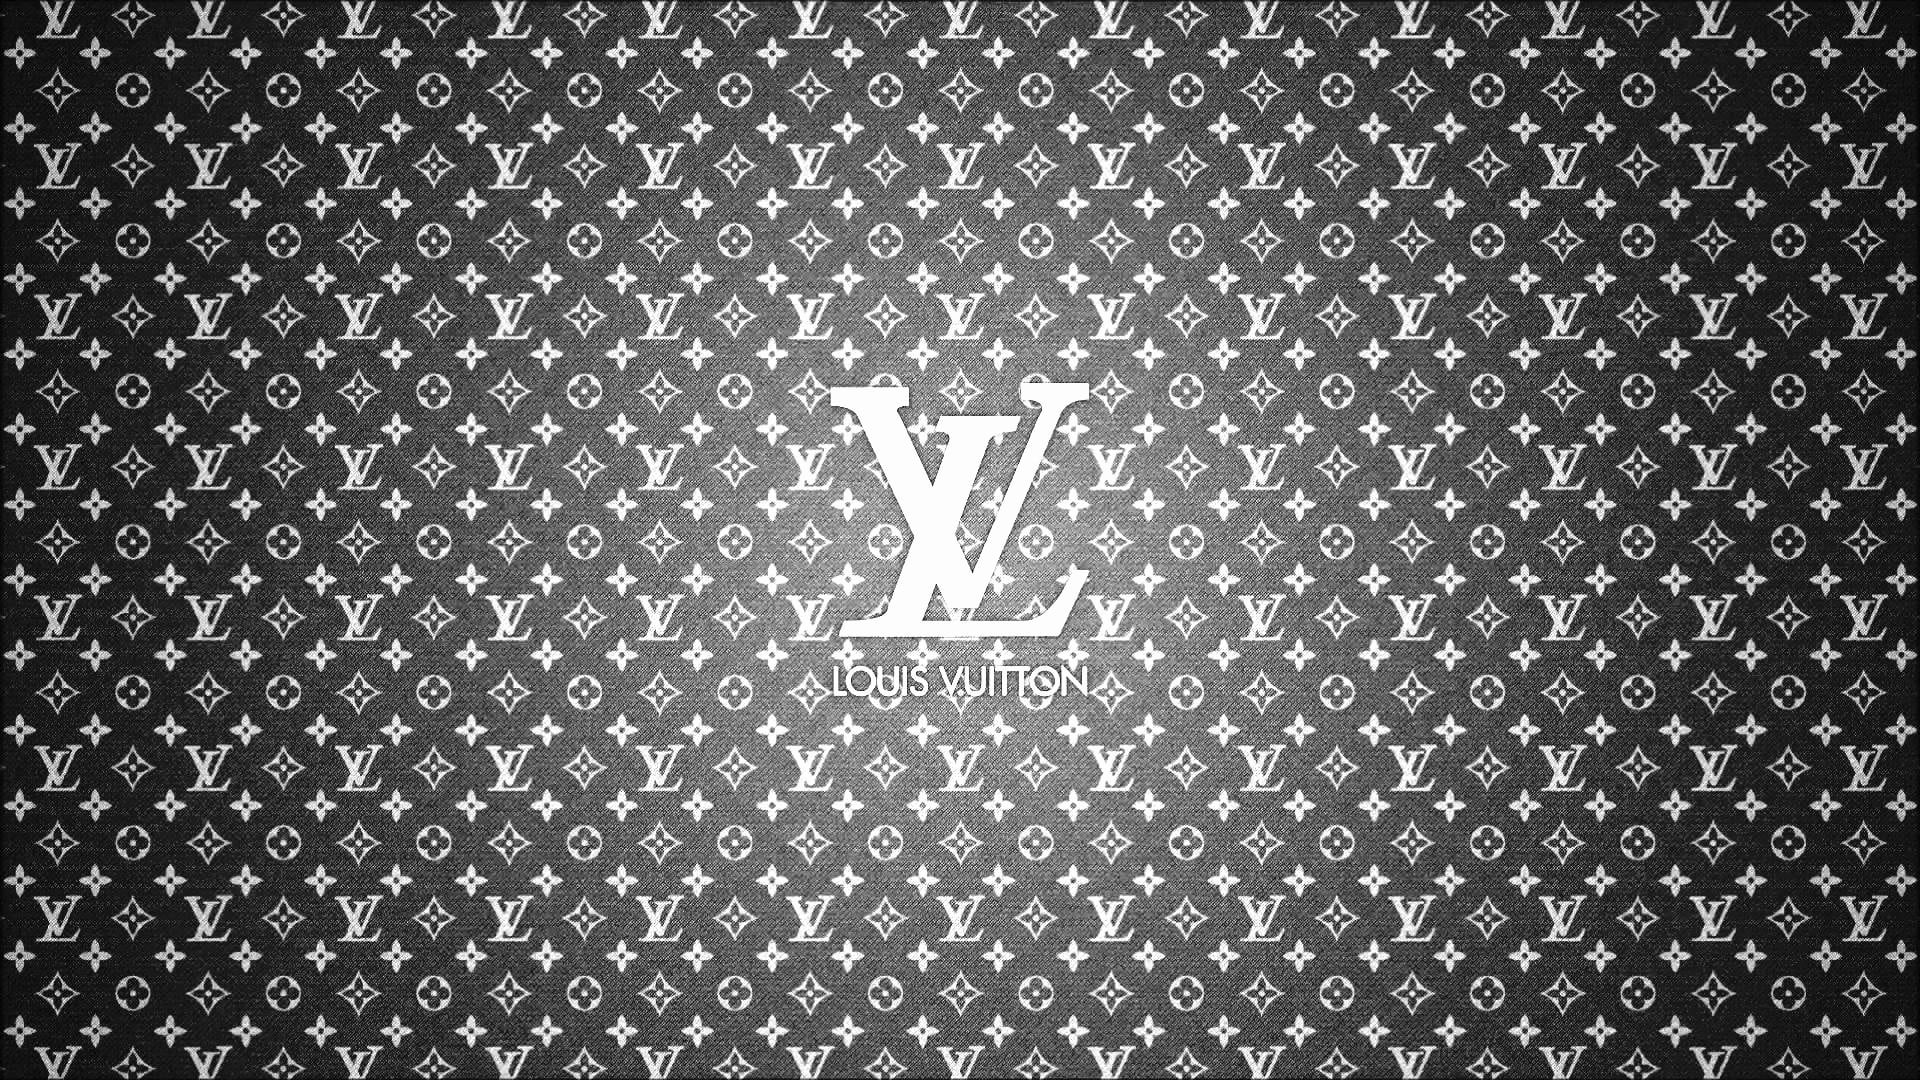 Louis Vuitton HD Wallpaper - KoLPaPer - Awesome Free HD Wallpapers